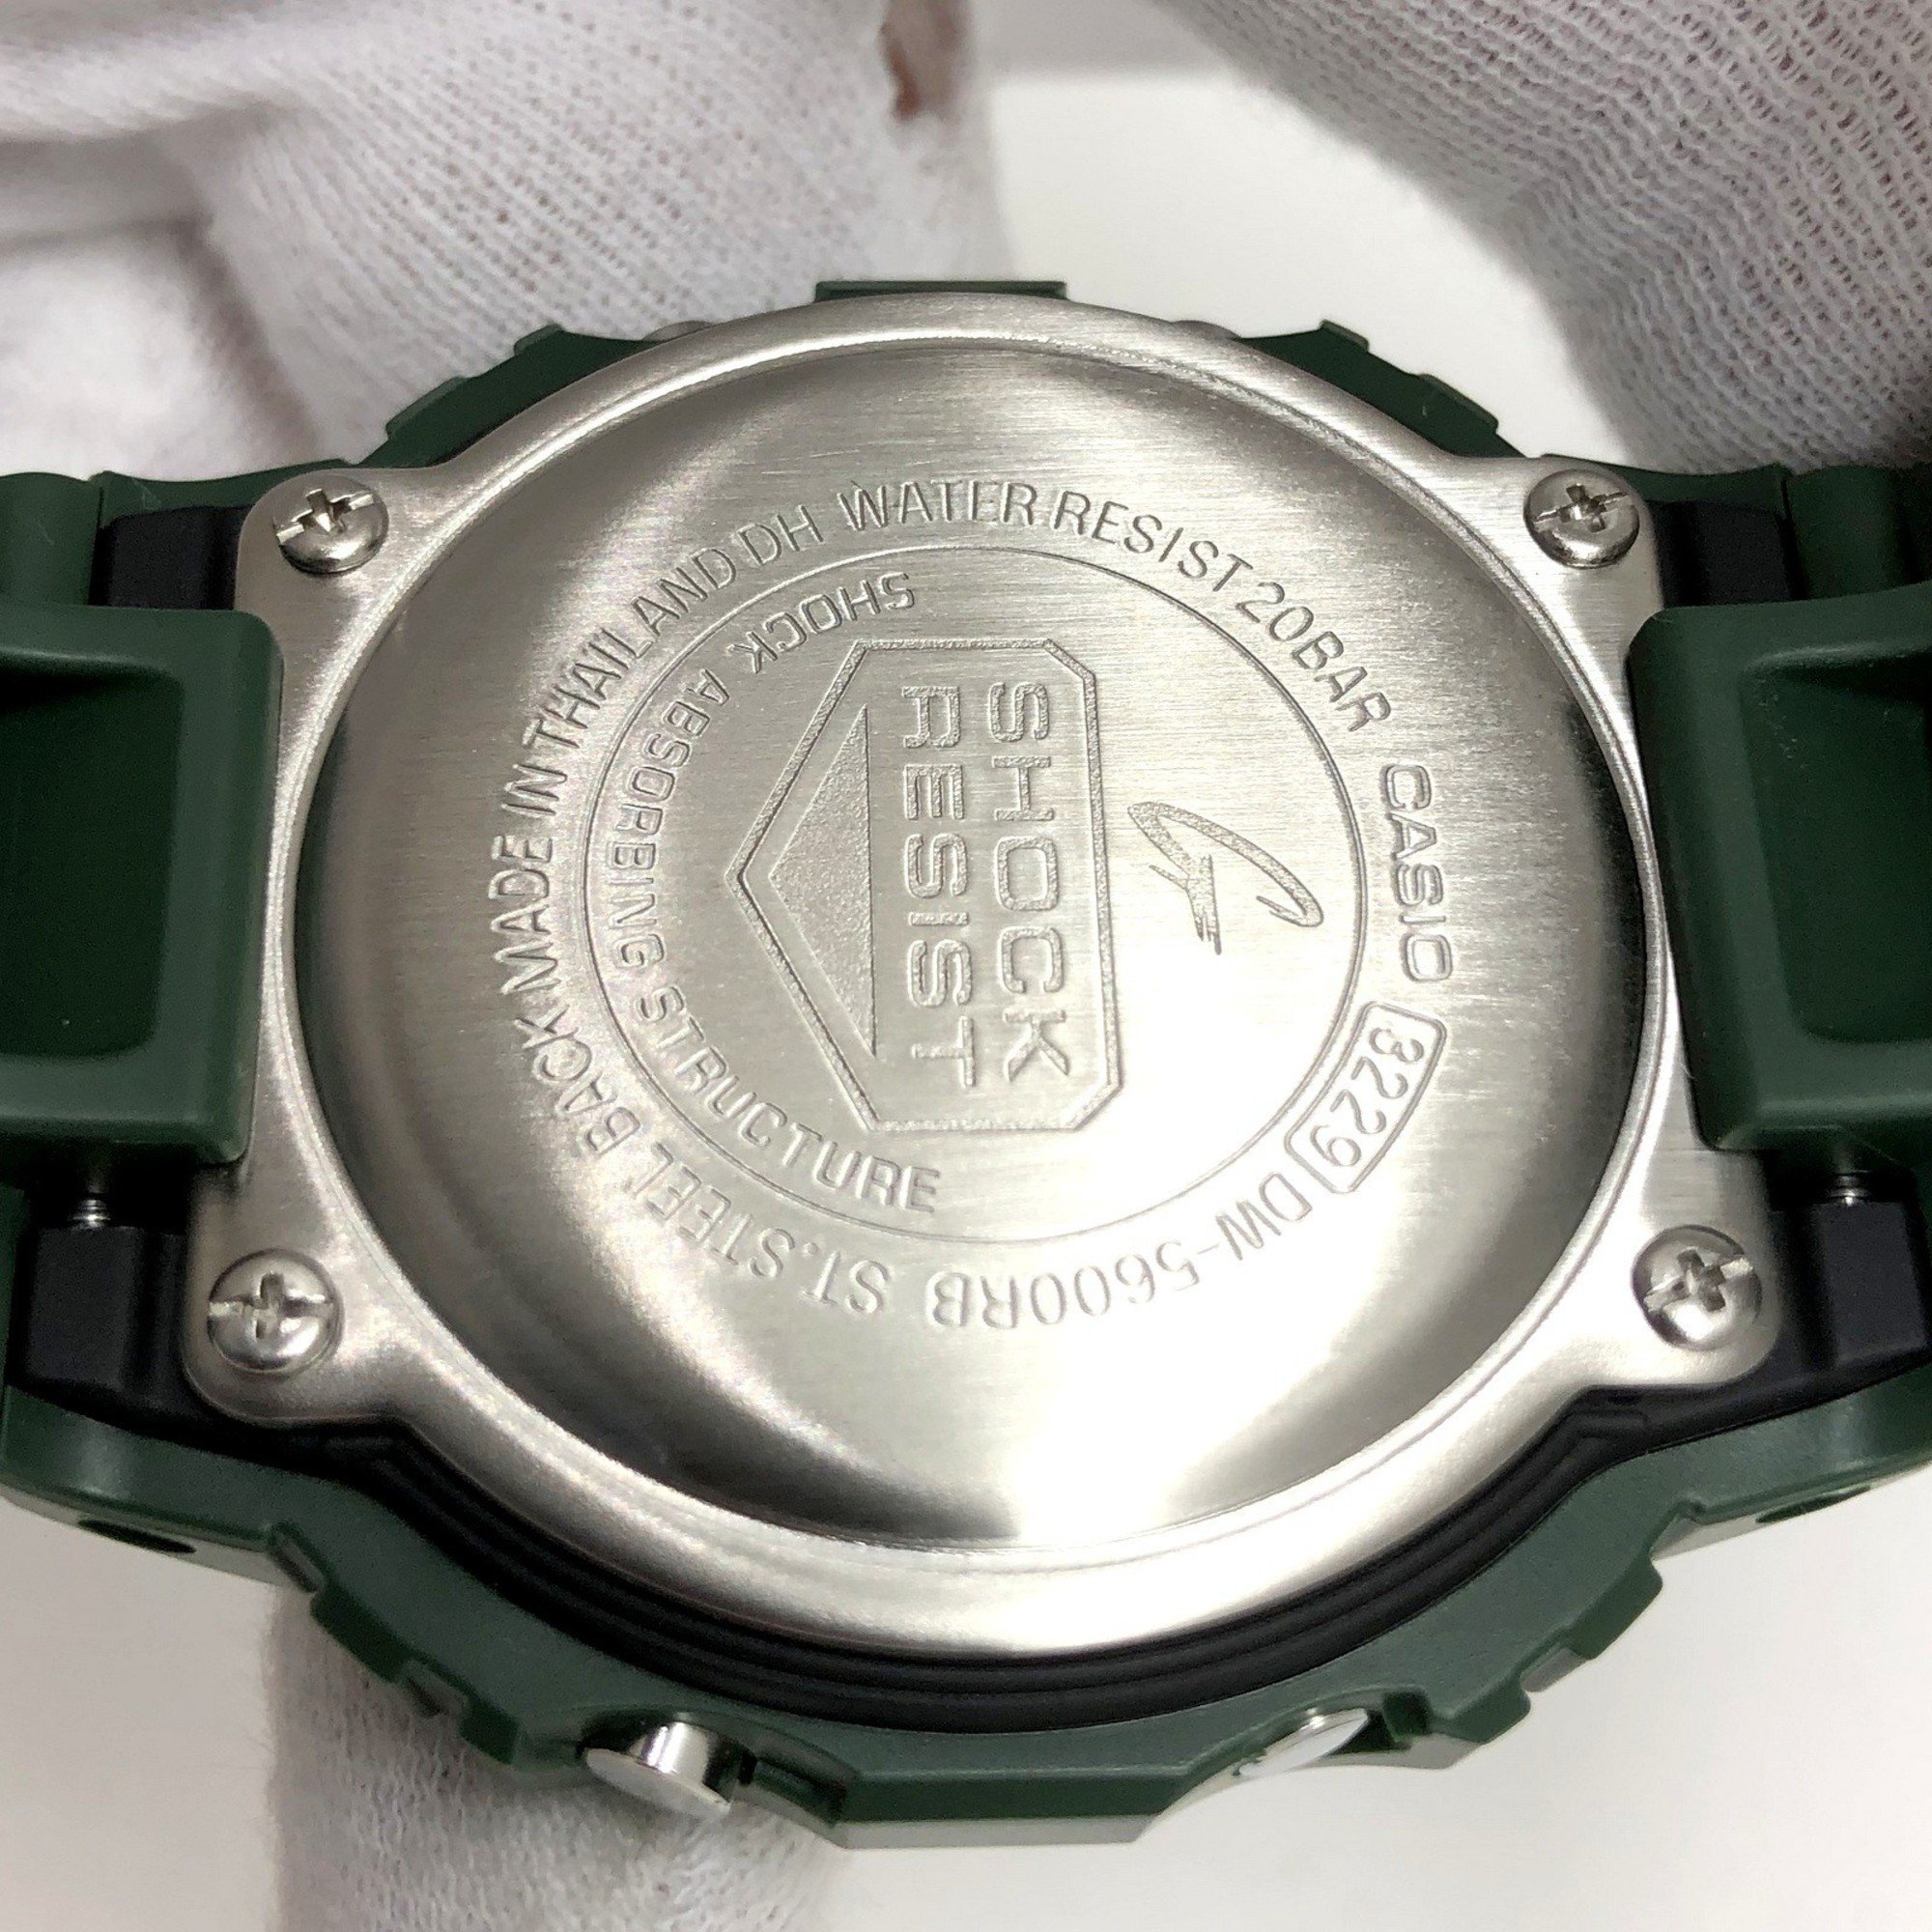 G-SHOCK CASIO Watch DW-5600RB-3JF Early Color Revival Digital Quartz Green Men's Mikunigaoka Store ITJERZBCUUZI